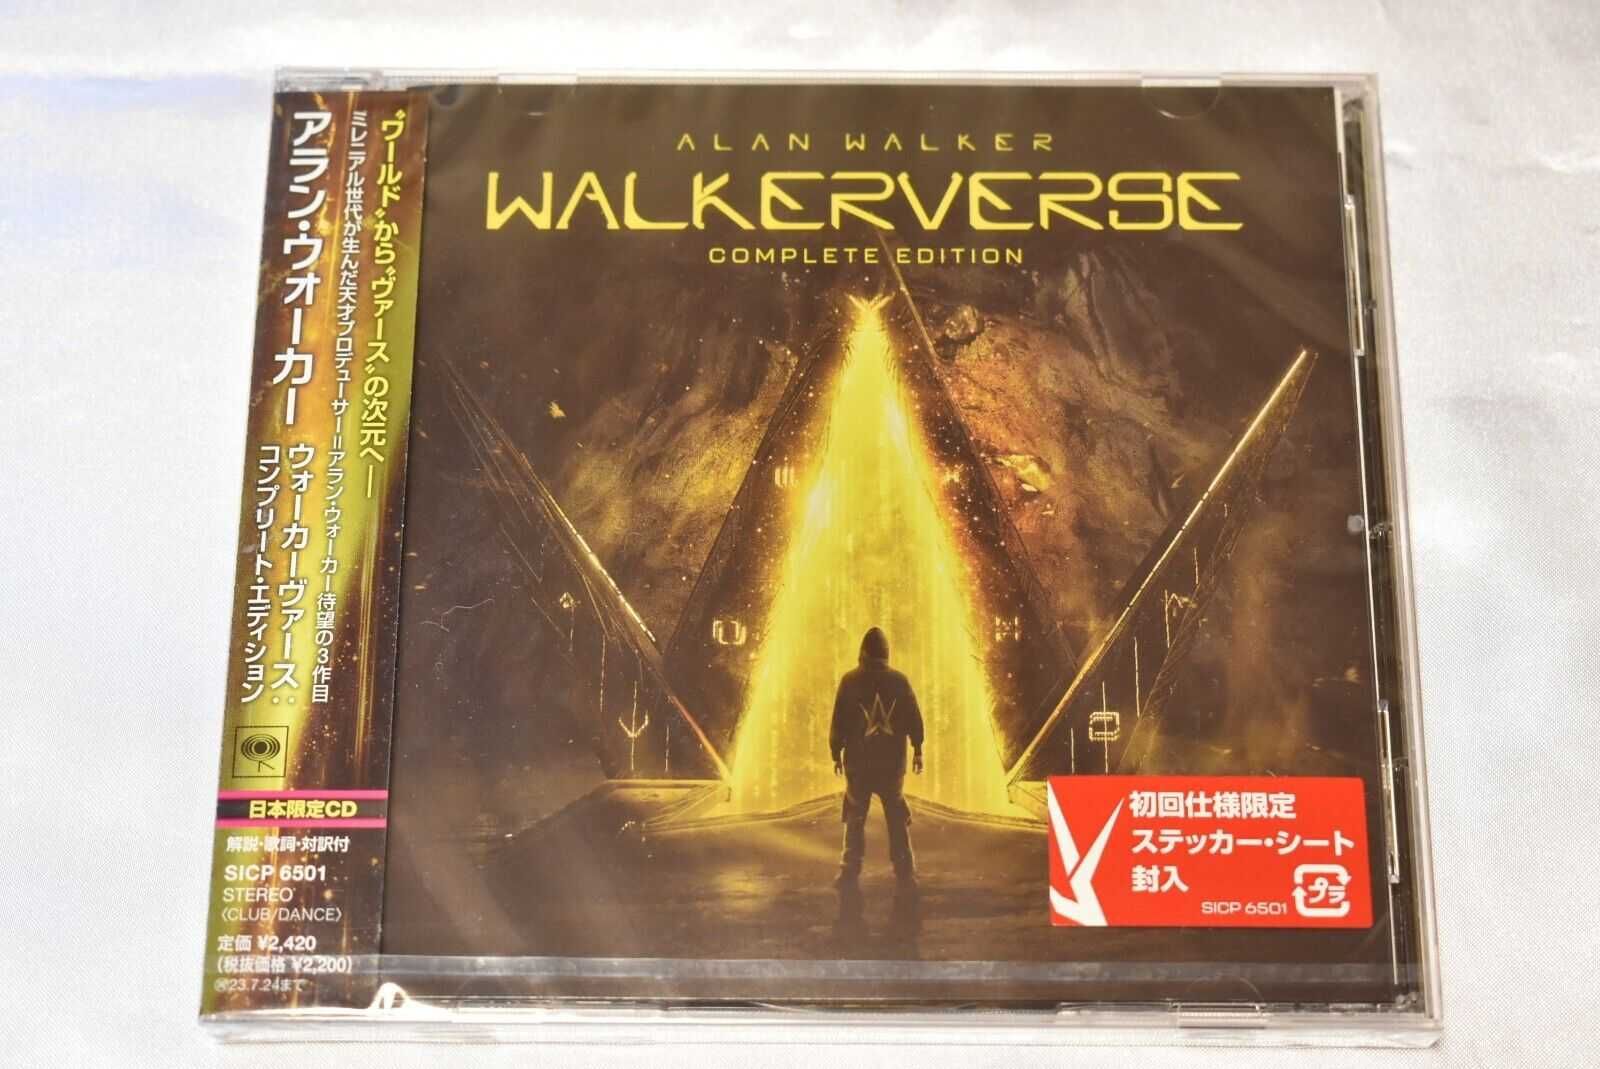 Alan Walker Walkerverse Complete Edition CD folia!